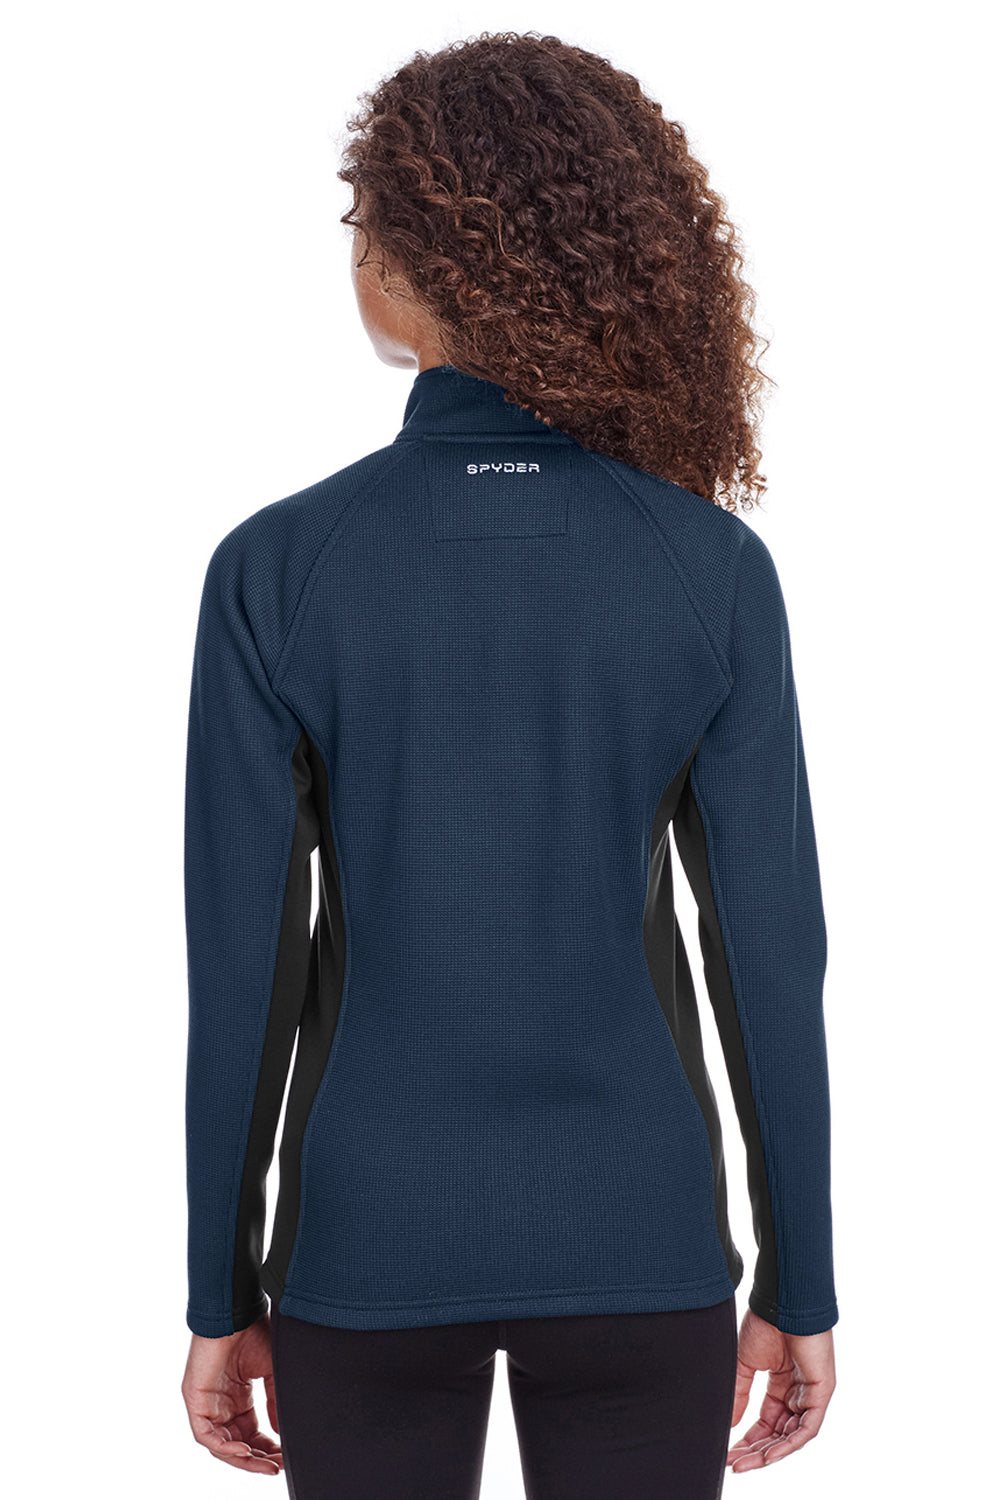 Spyder S16562 Womens Constant 1/4 Zip Sweater Navy Blue Back